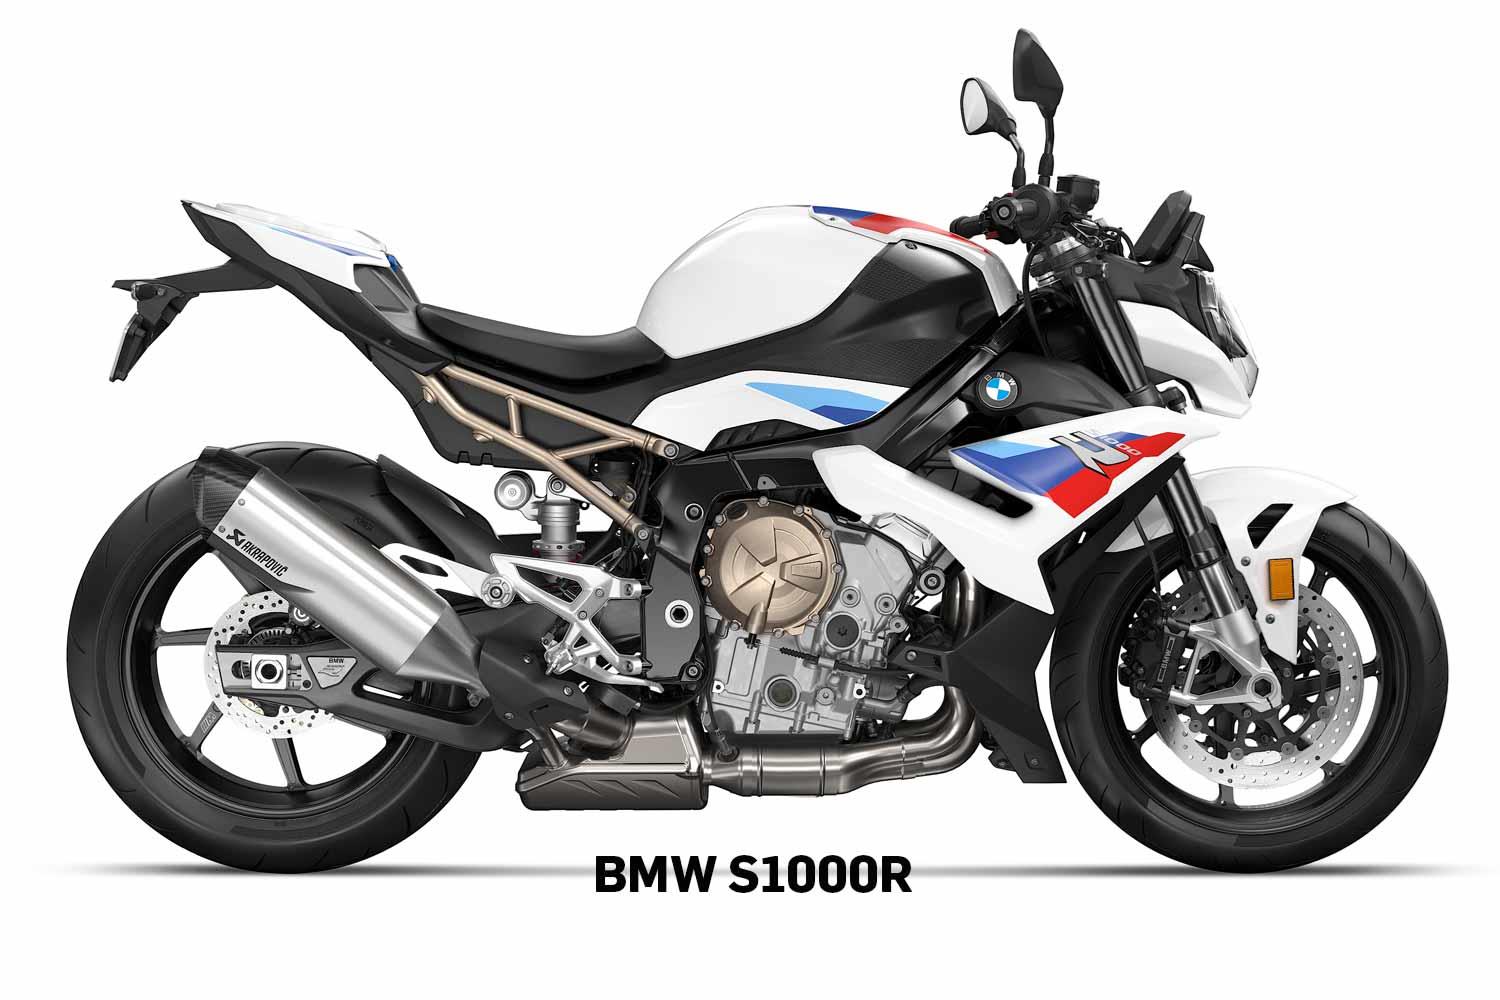 BMW S1000R long-term test